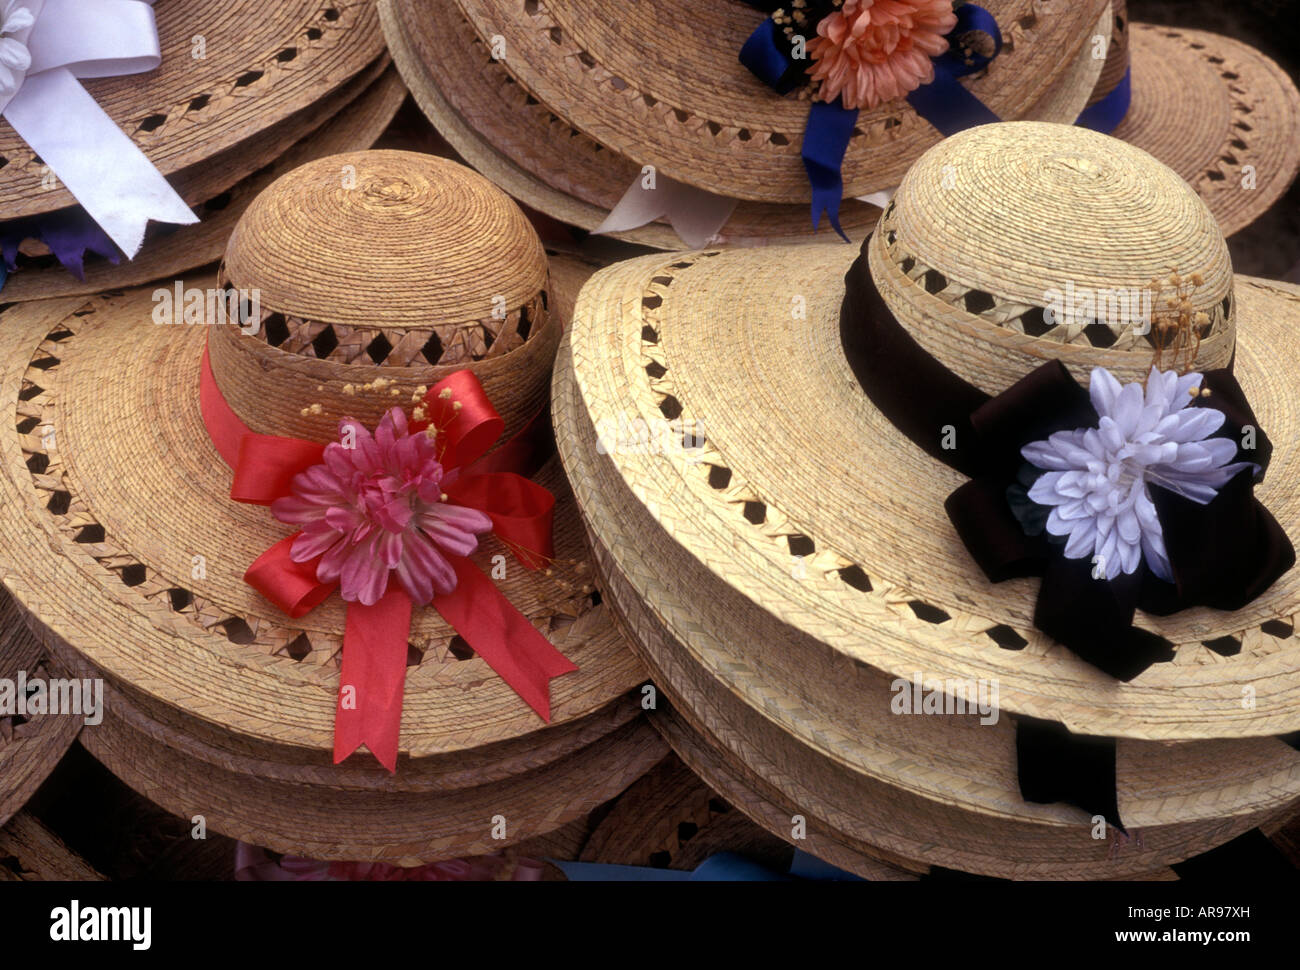 straw hat, straw hats, hat, hats, hats for sale, hats on sale, market, marketplace, mercado, town of Patzcuaro, Patzcuaro, Michoacan State, Mexico Stock Photo